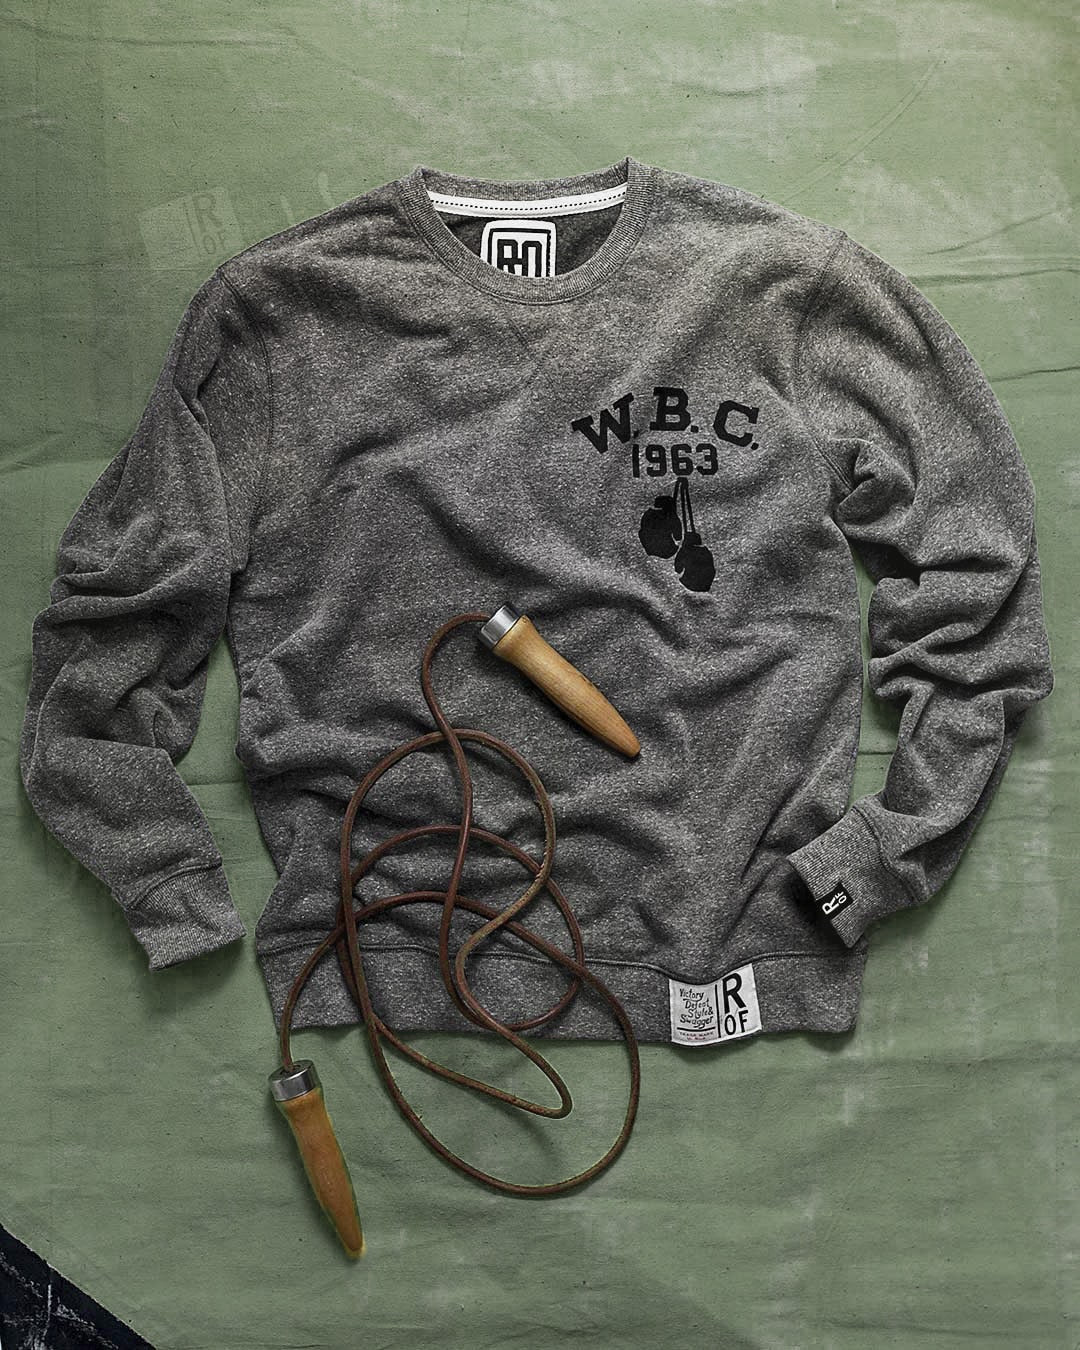 WBC 1963 Grey Sweatshirt - Roots of Fight